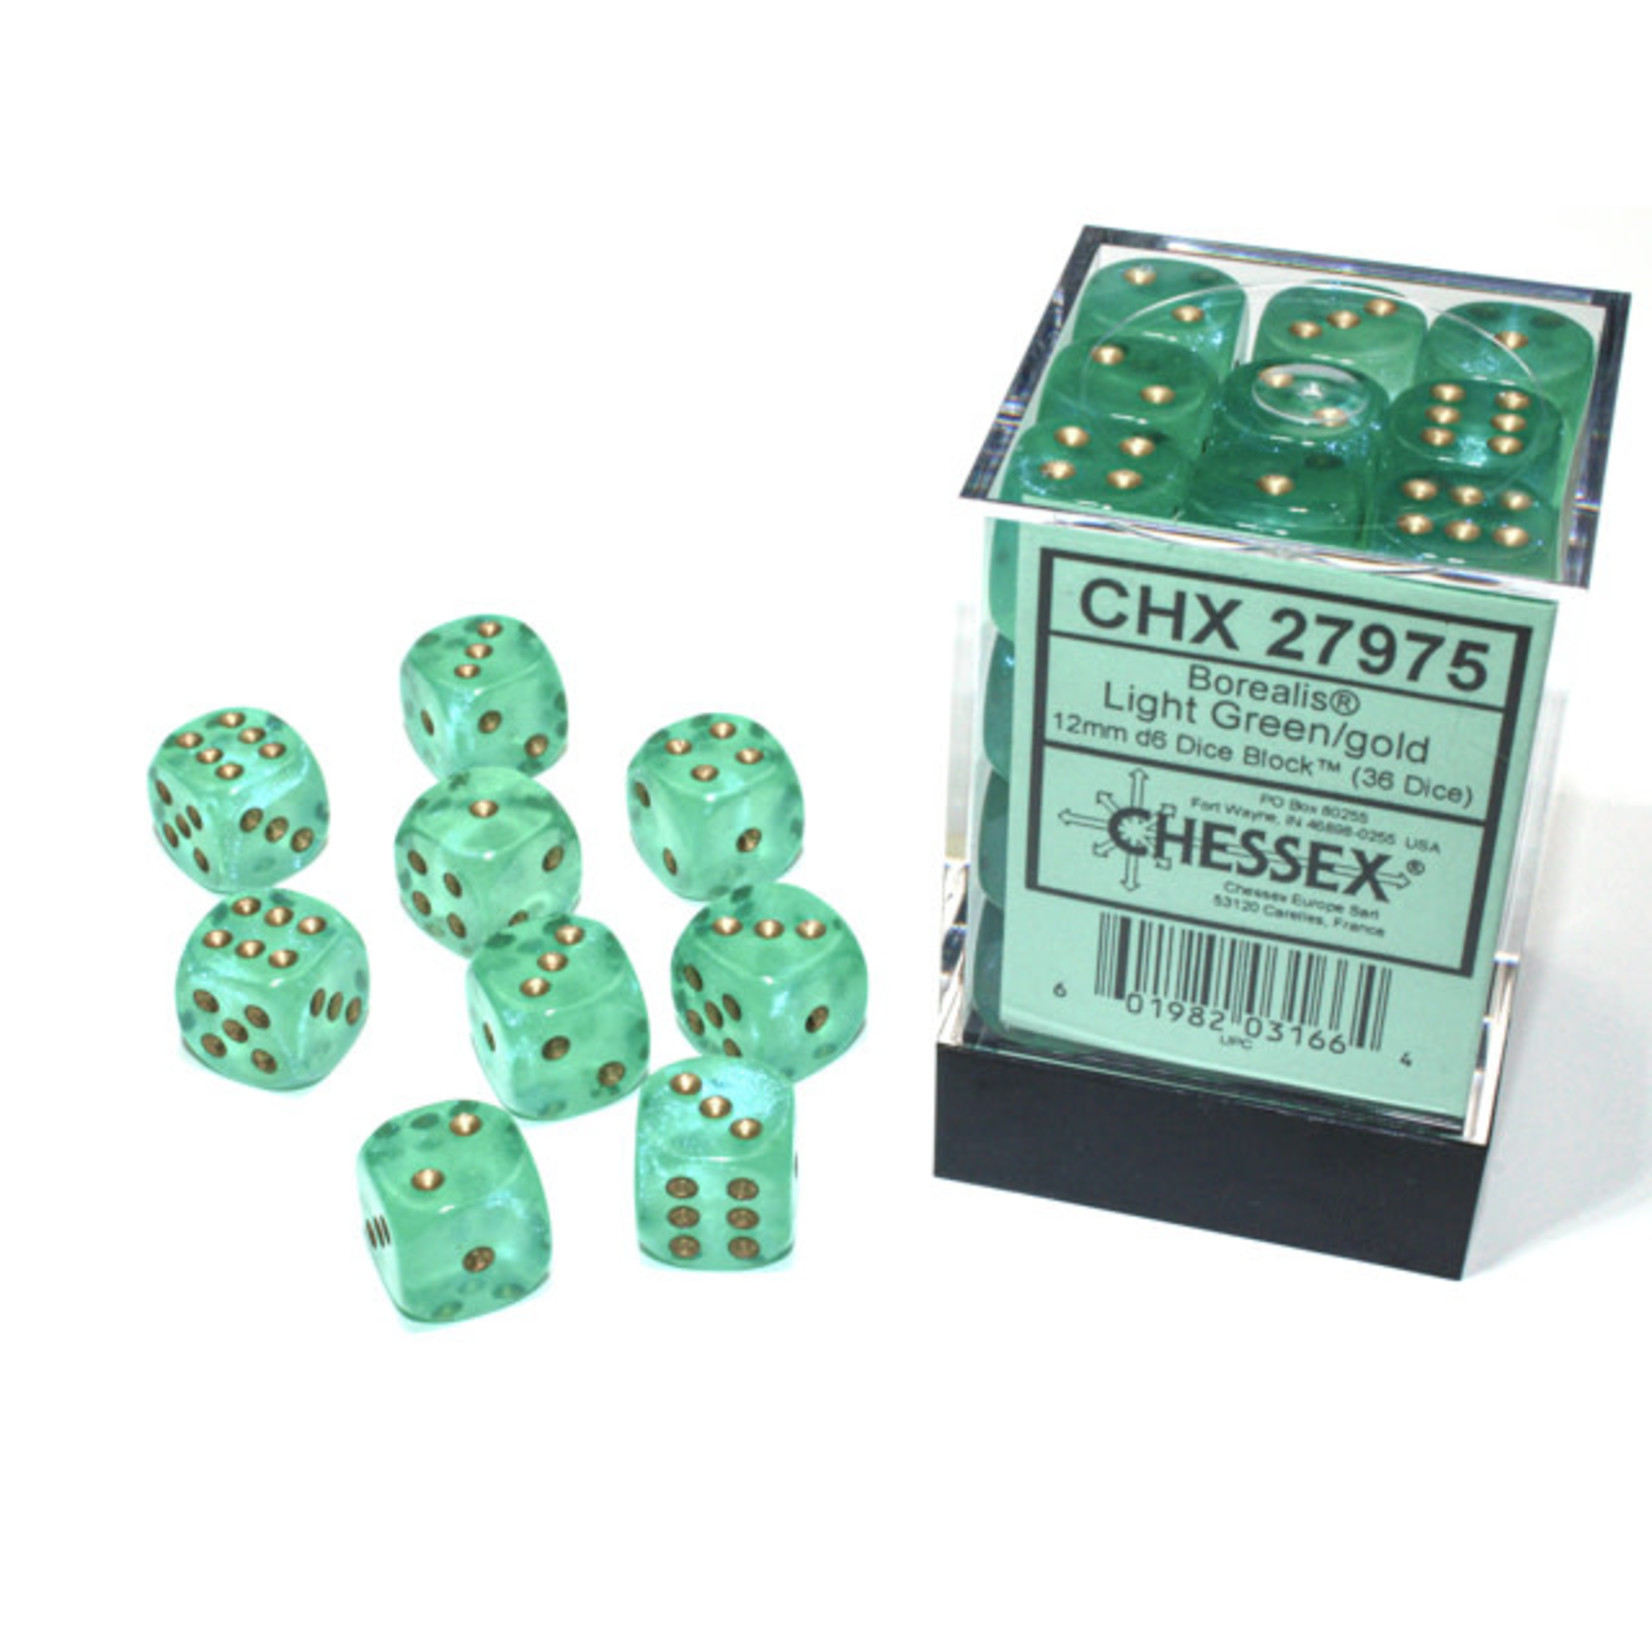 Chessex Borealis: 12mm d6 Light Green/gold Luminary Dice (36)